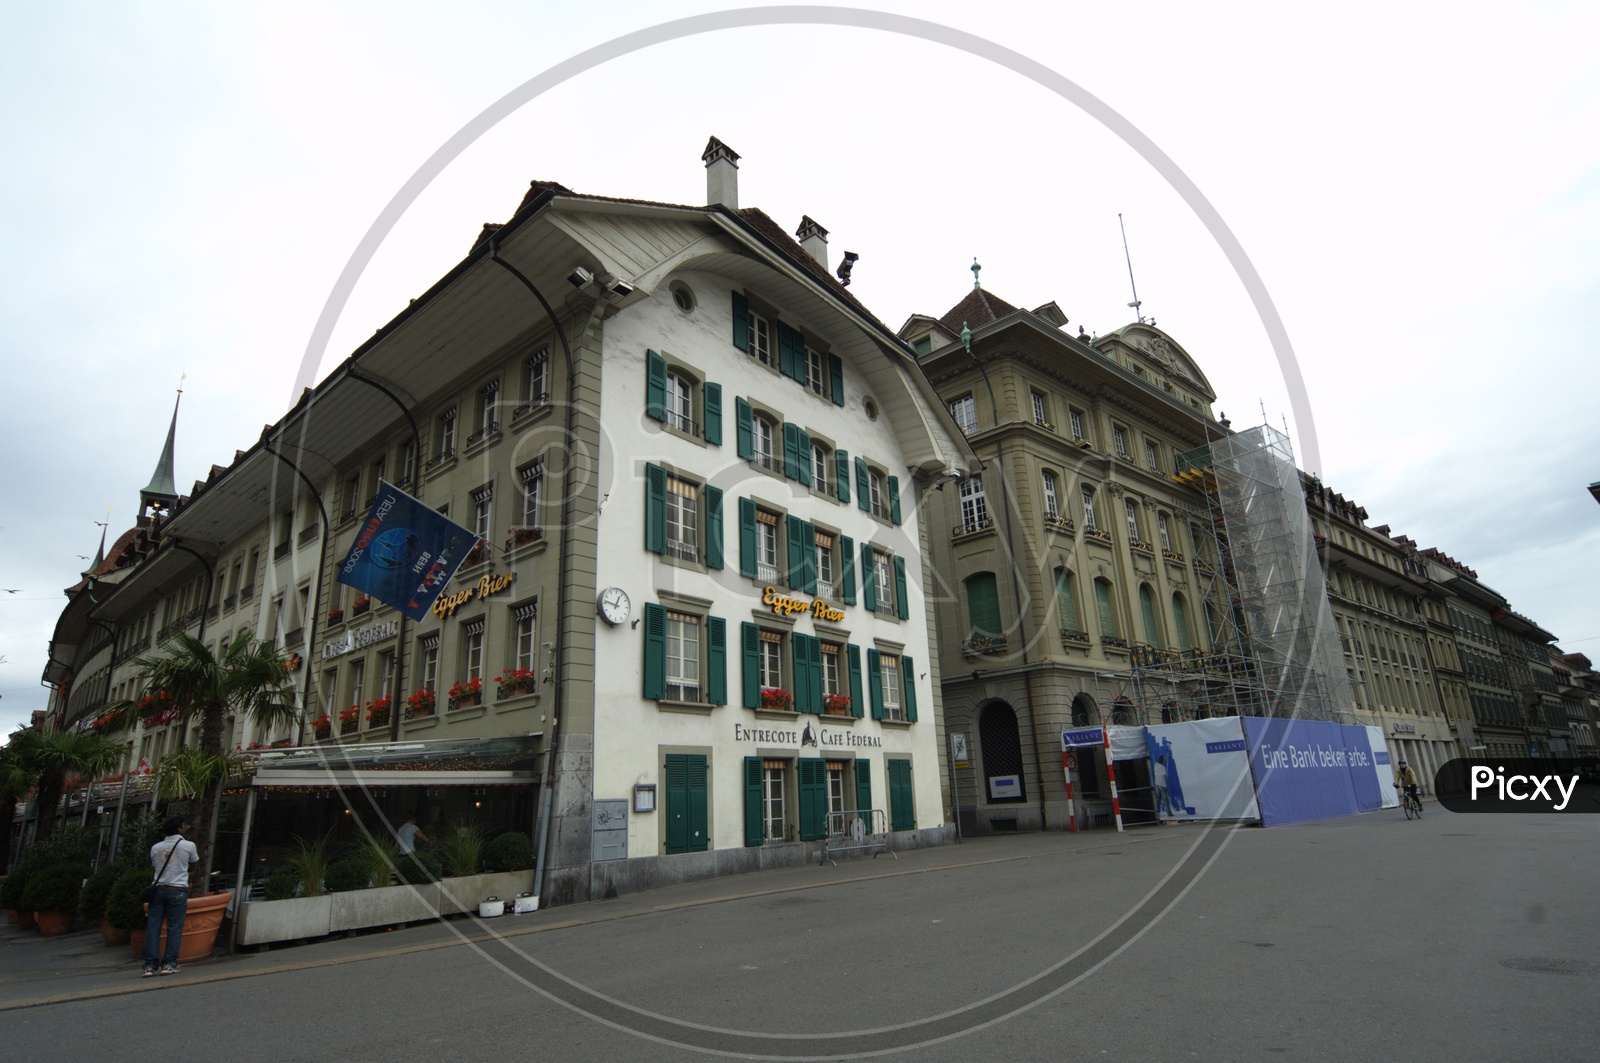 Hotel alongside the Swiss National Bank